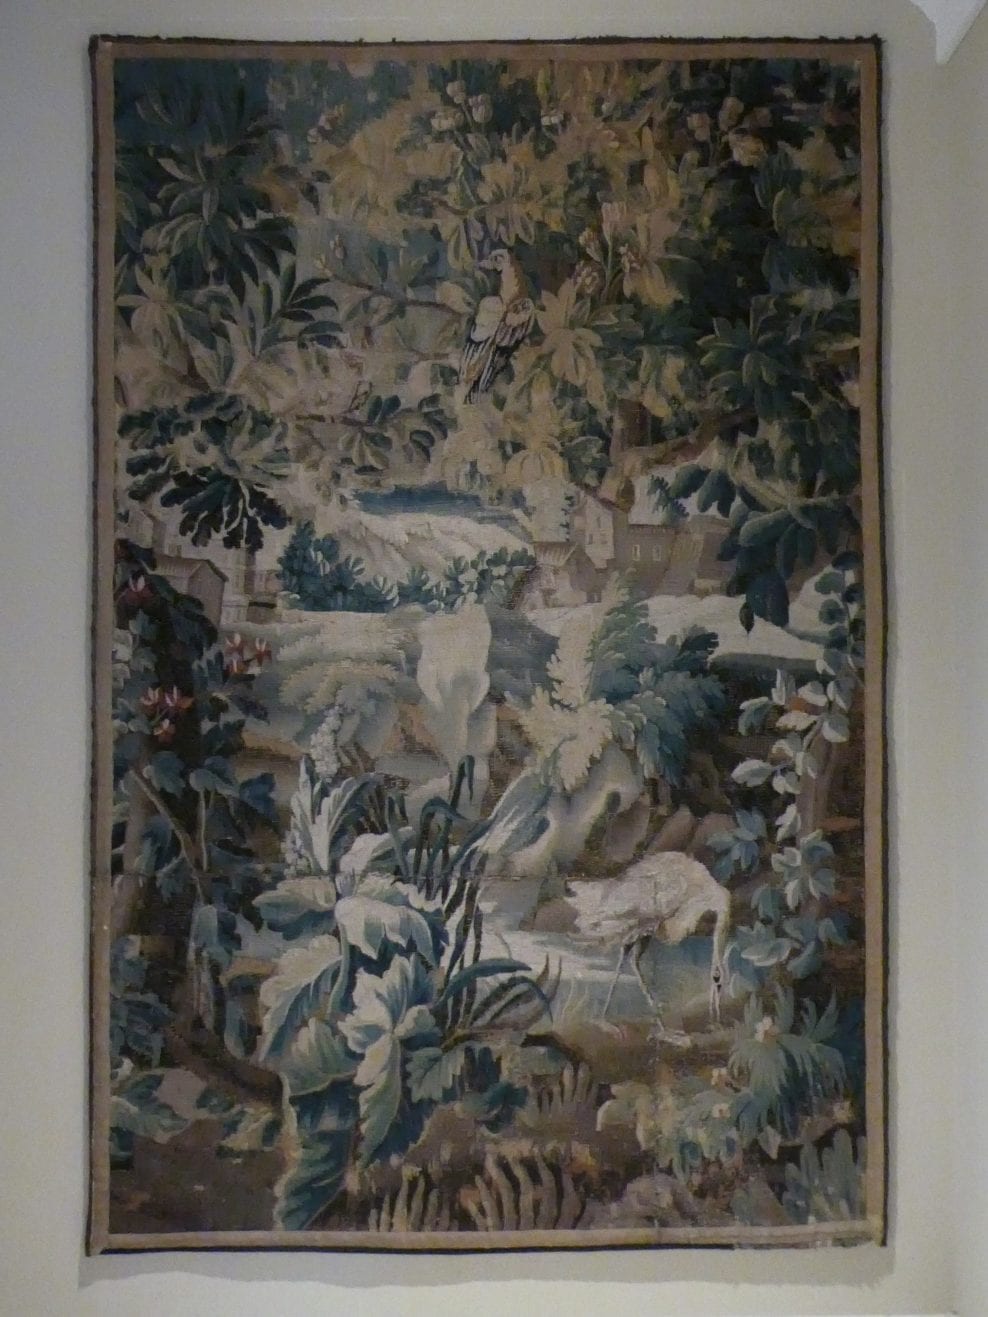 Verdure Tapestry